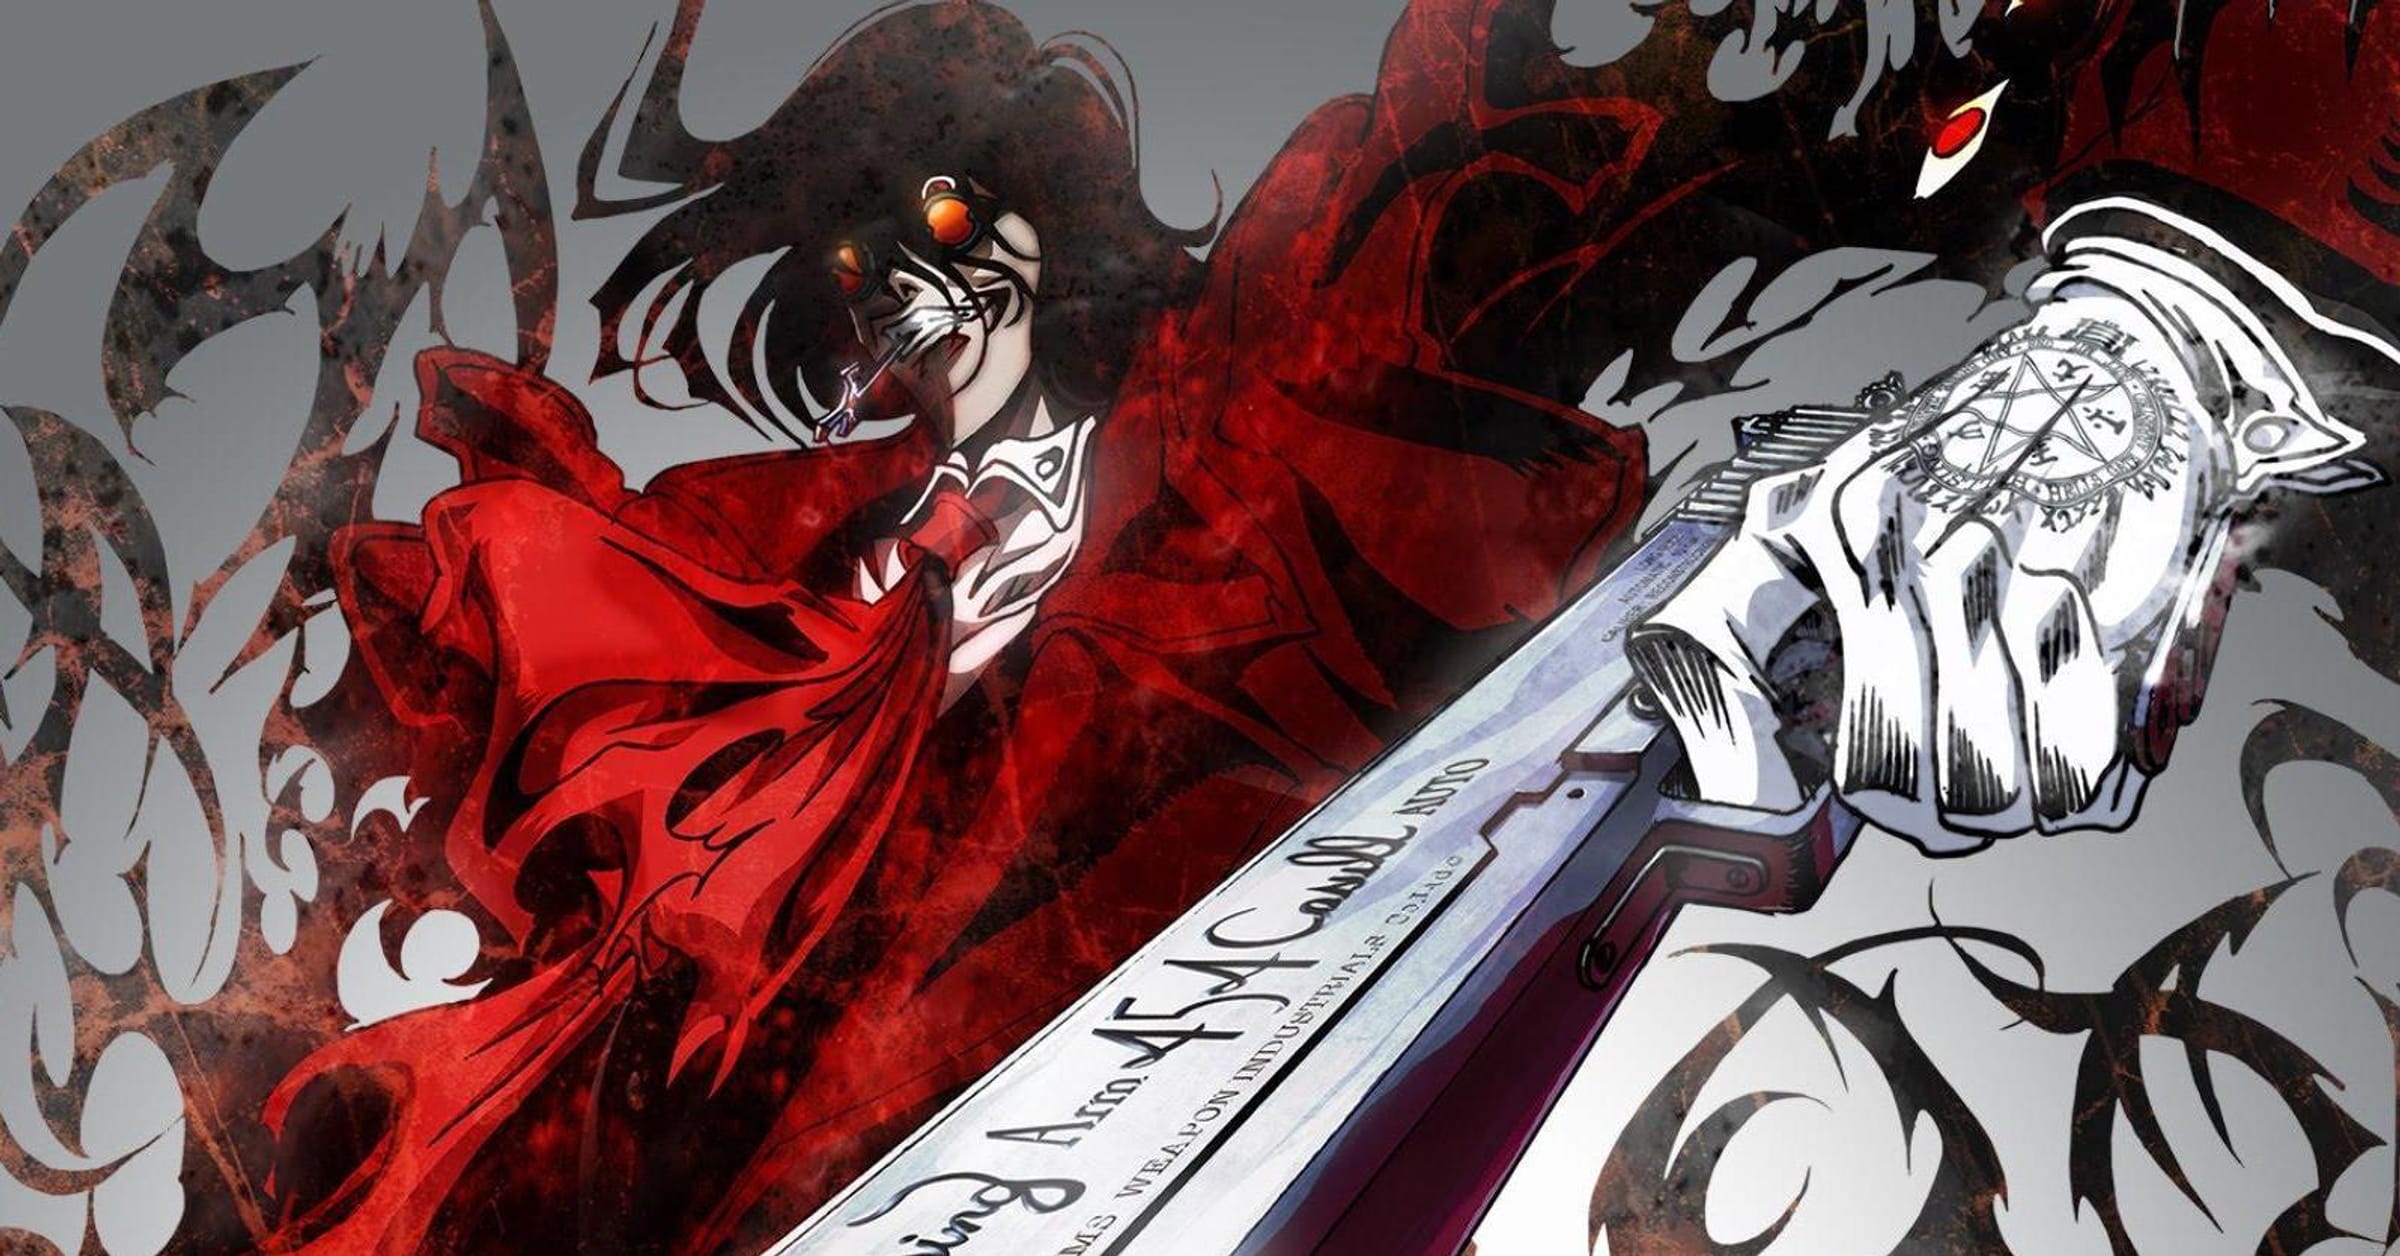 Vampire Anime Strike the Blood Gets New OVA Series, Original OVA Episode 